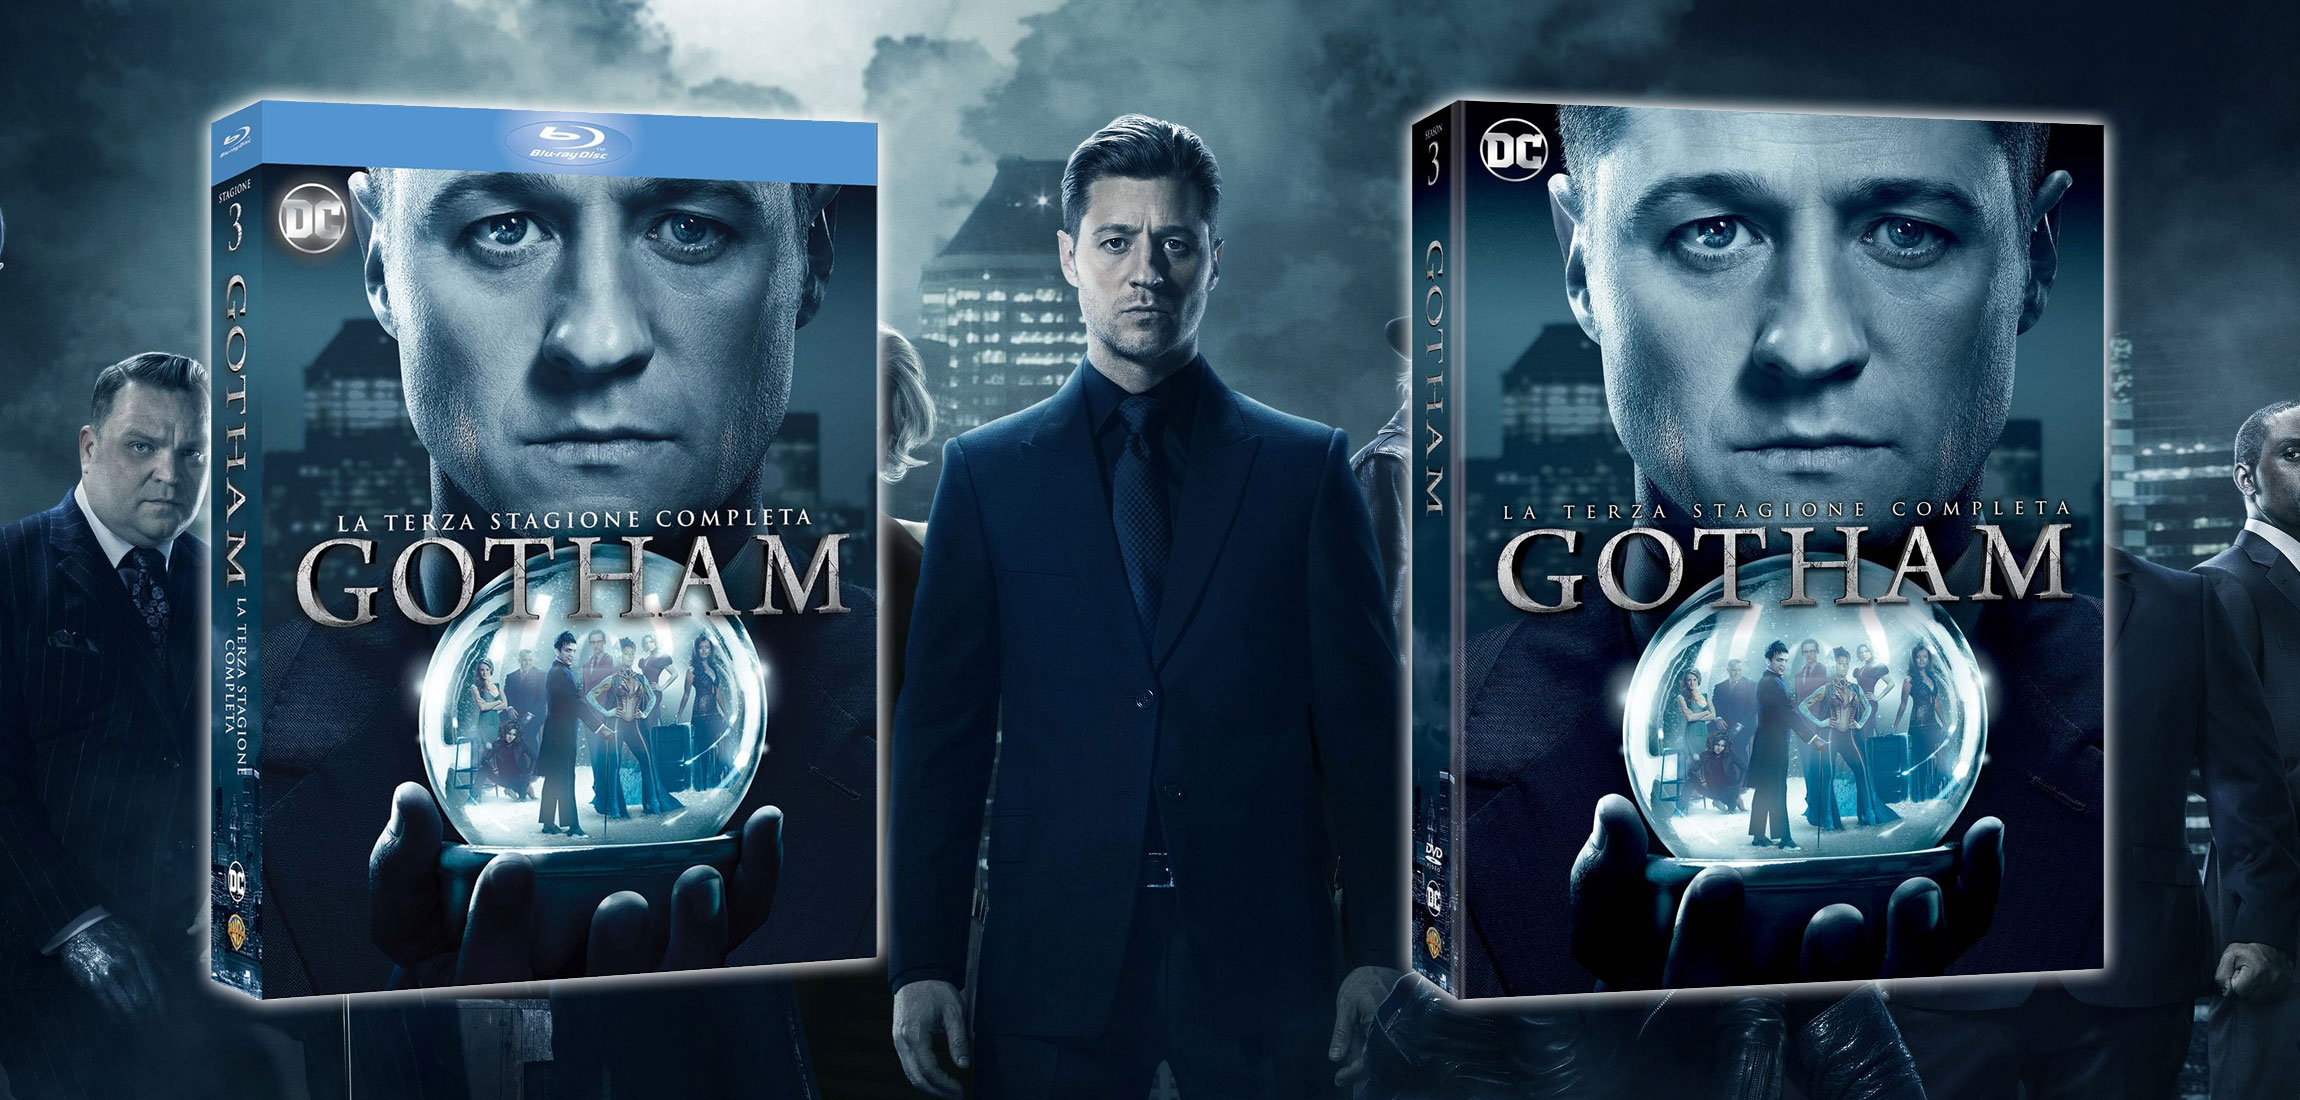 Gotham stagione 3 in DVD e Blu-ray